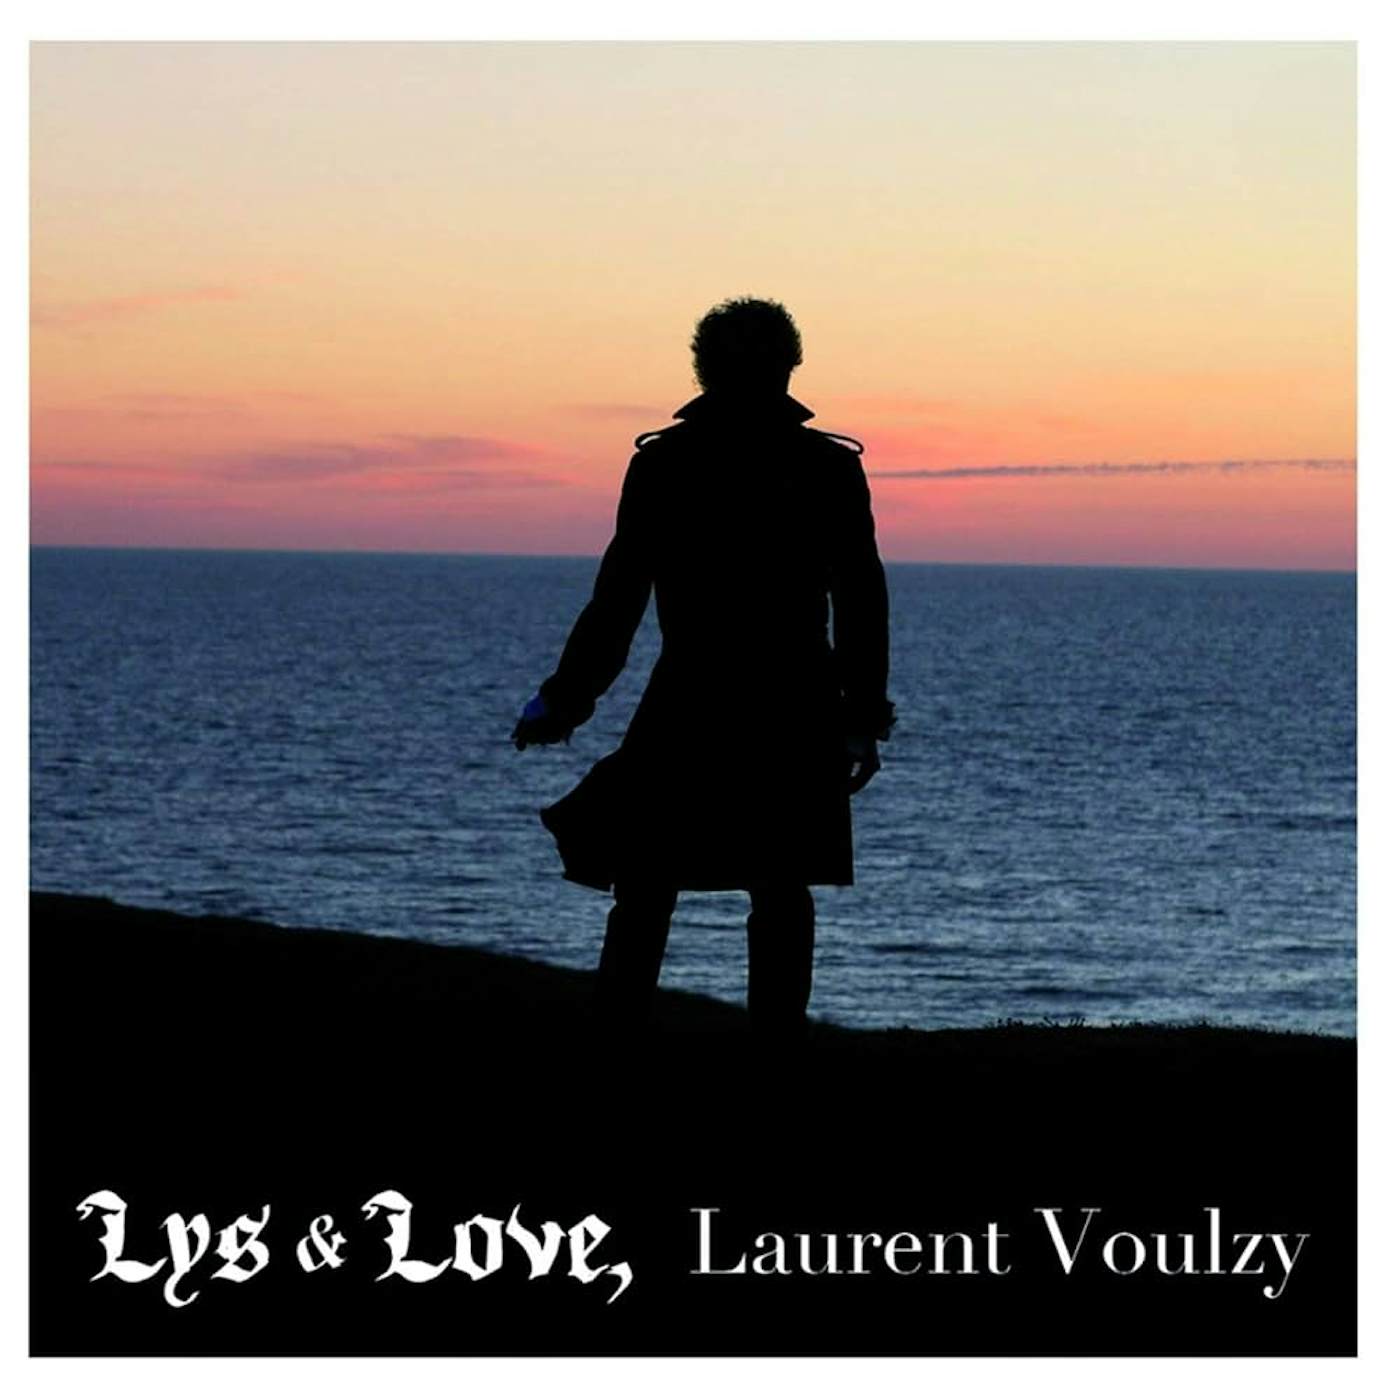 Laurent Voulzy LYS & LOVE Vinyl Record